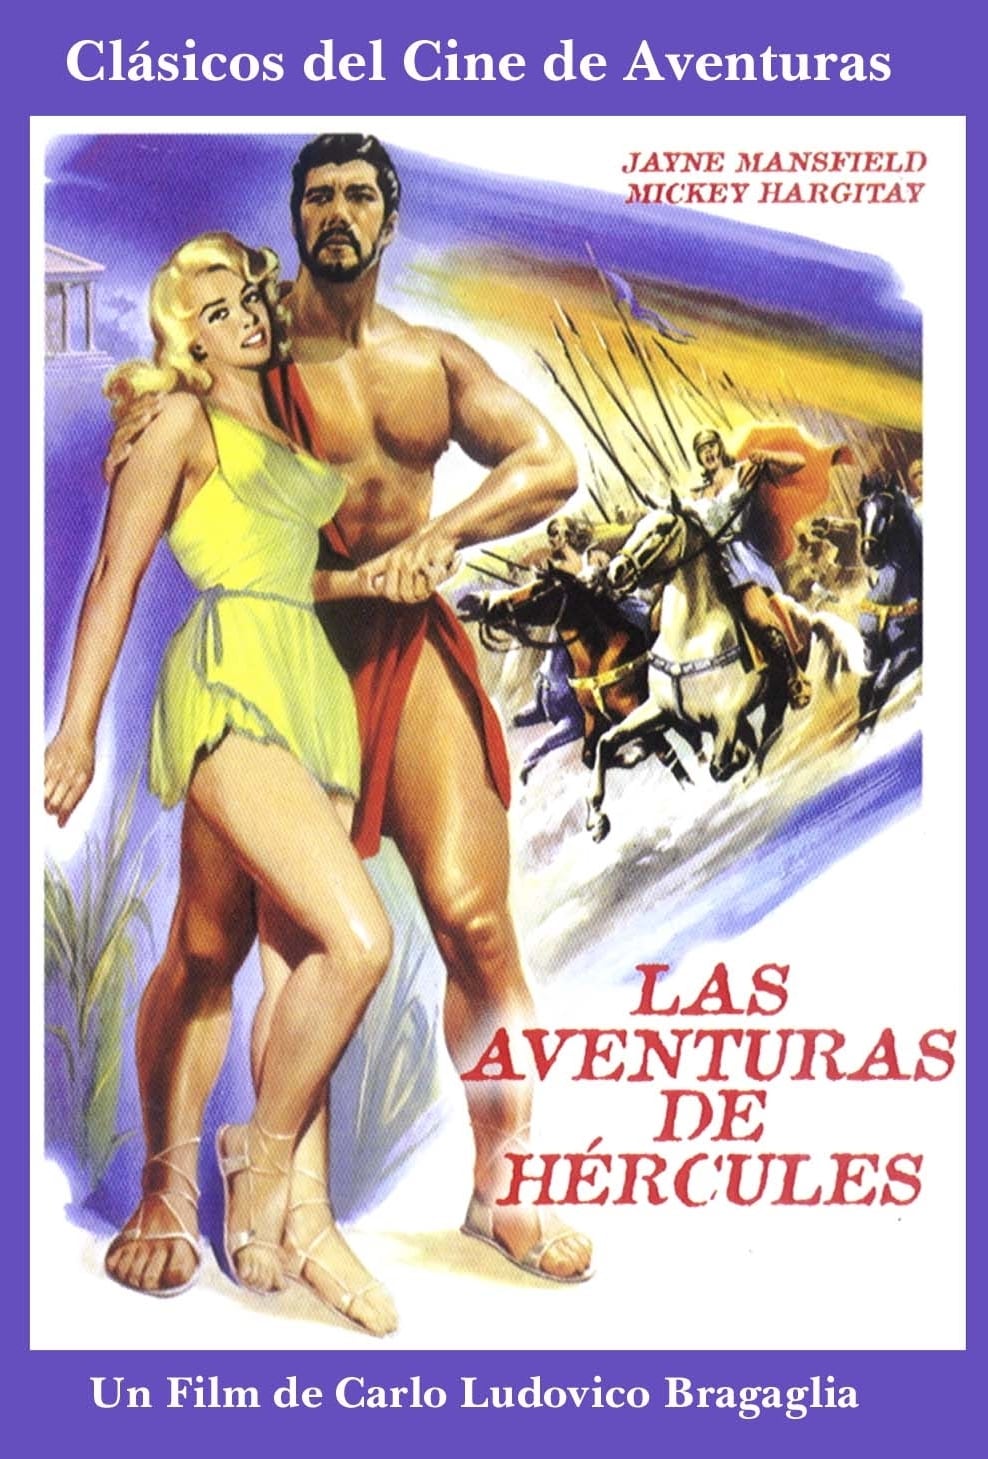 The Loves of Hercules